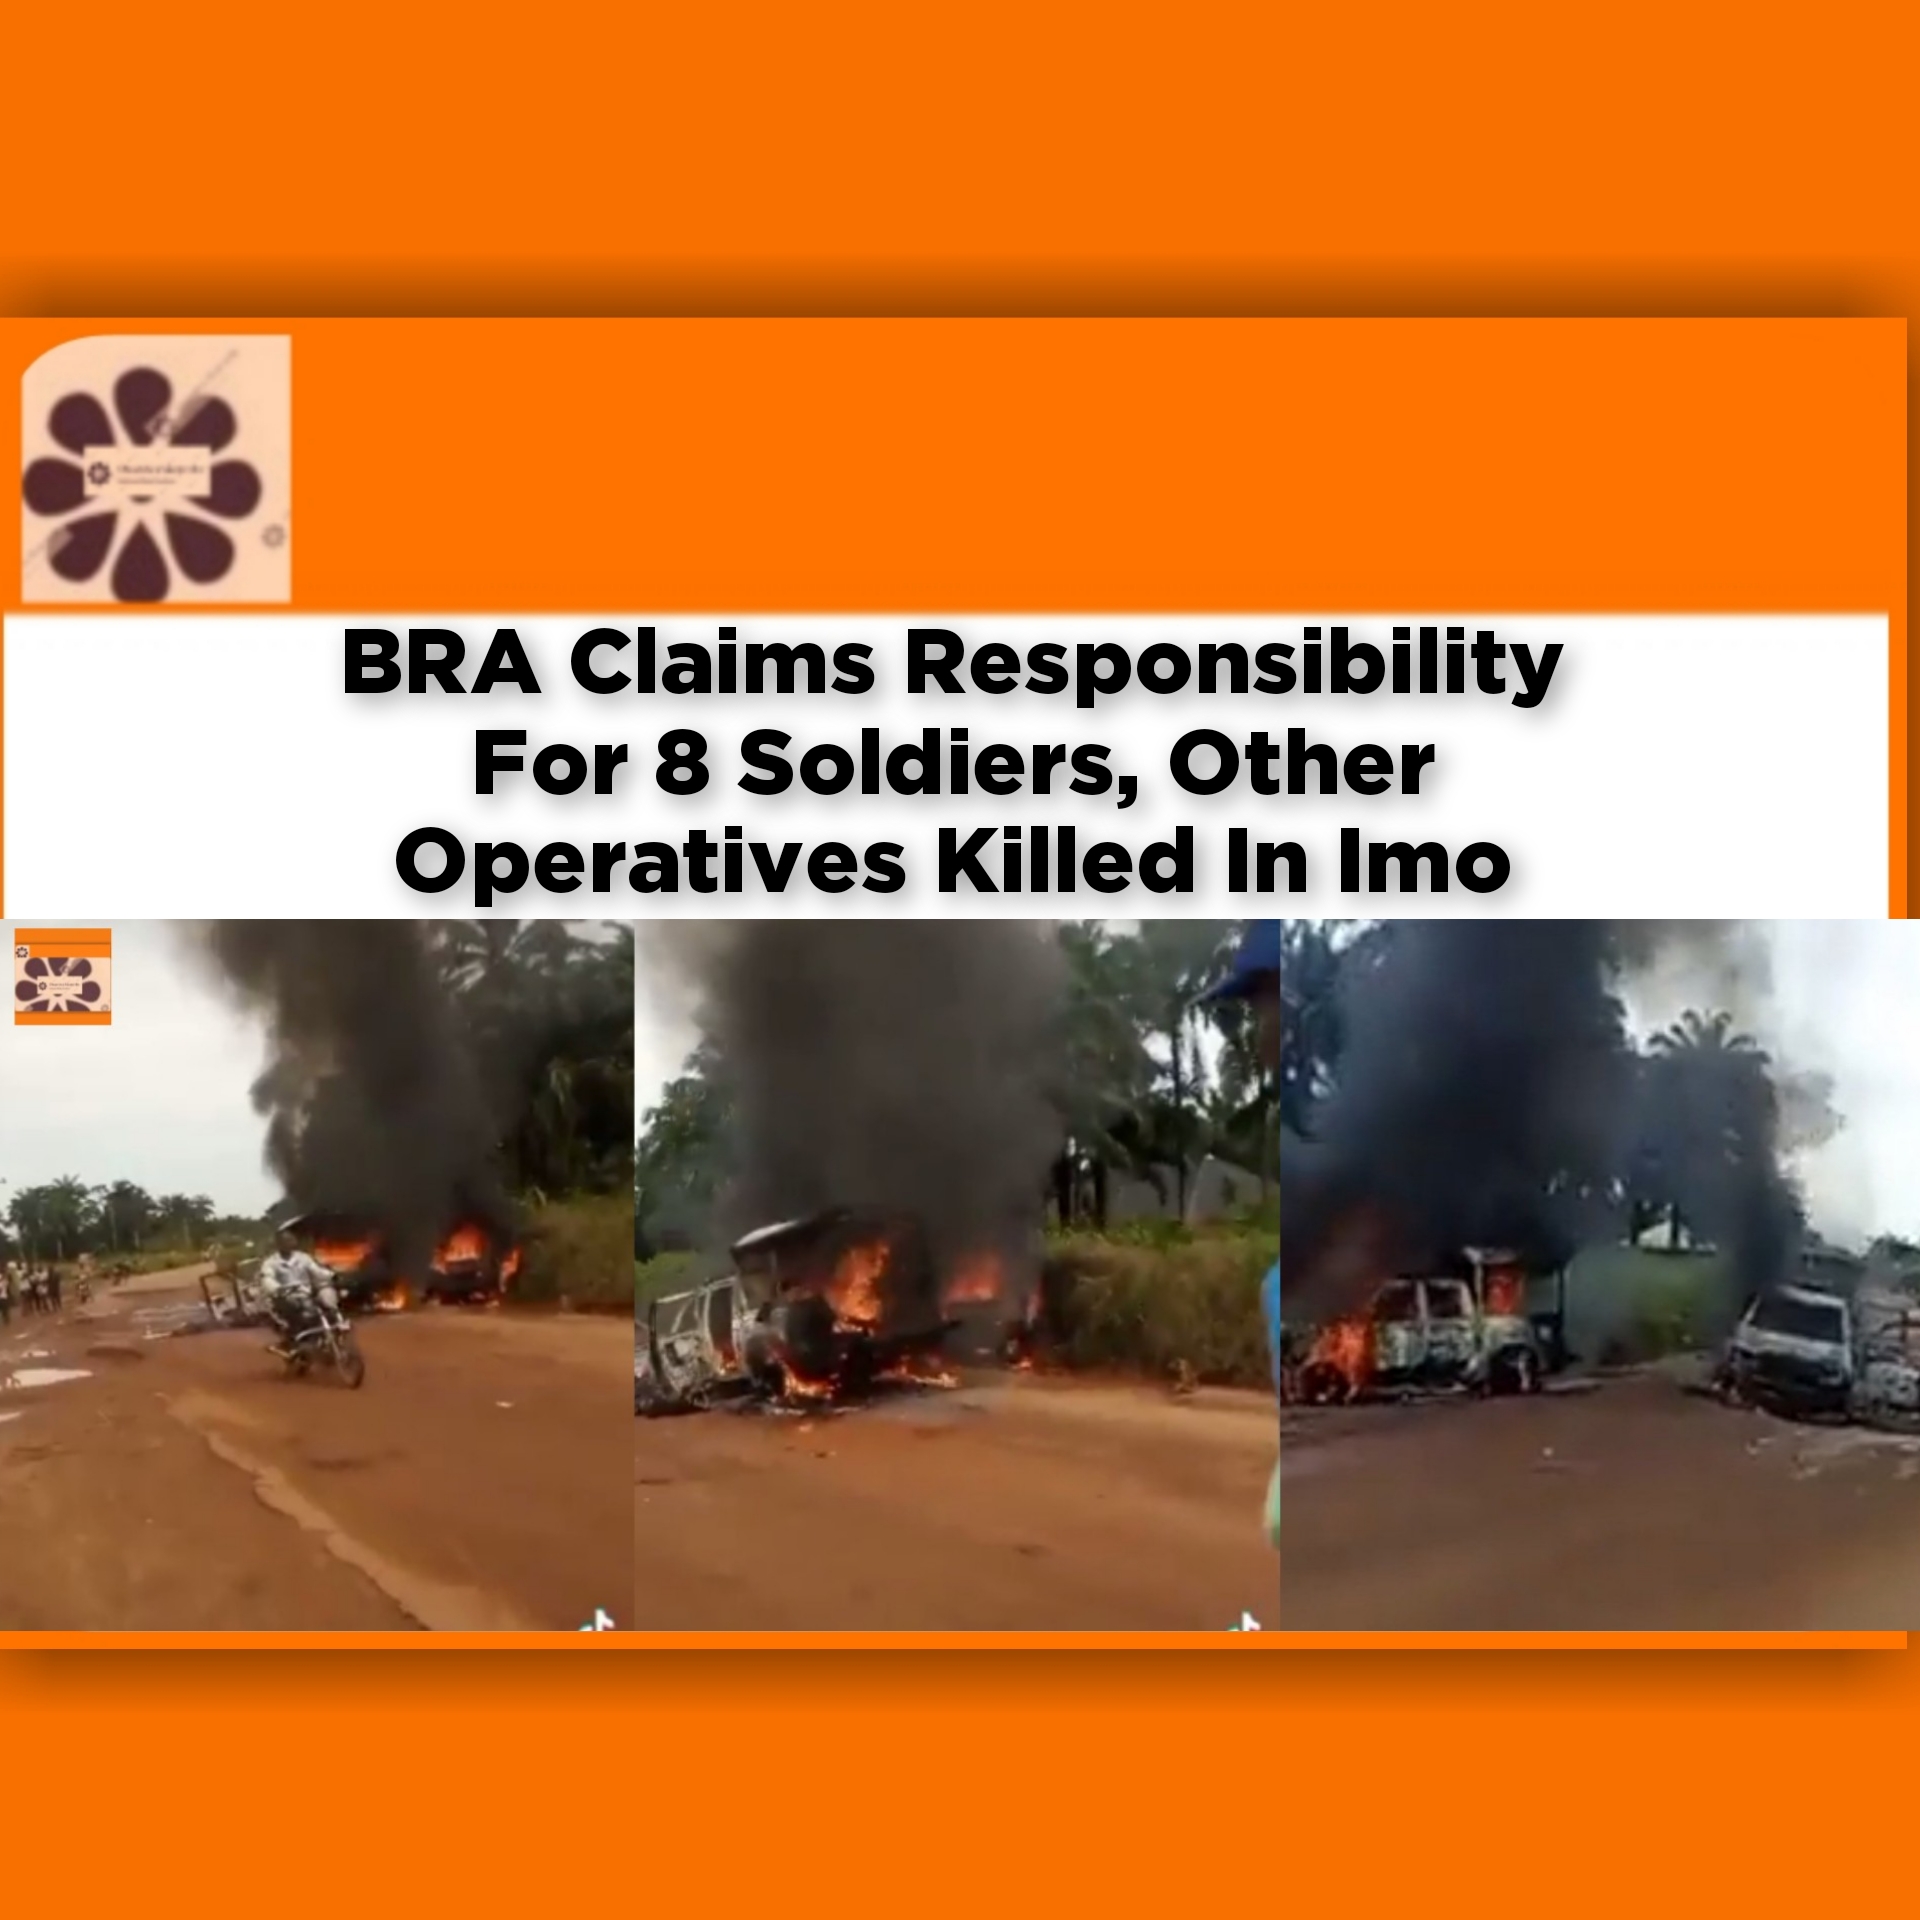 BRA Claims Responsibility For 8 Soldiers, Other Operatives Killed In Imo ~ OsazuwaAkonedo #Abia #Biafra #BRA #Ekpa #Gunmen #Imo #ipob #Ohafia #Simon #SitAtHome #Umualumaku #Unknown